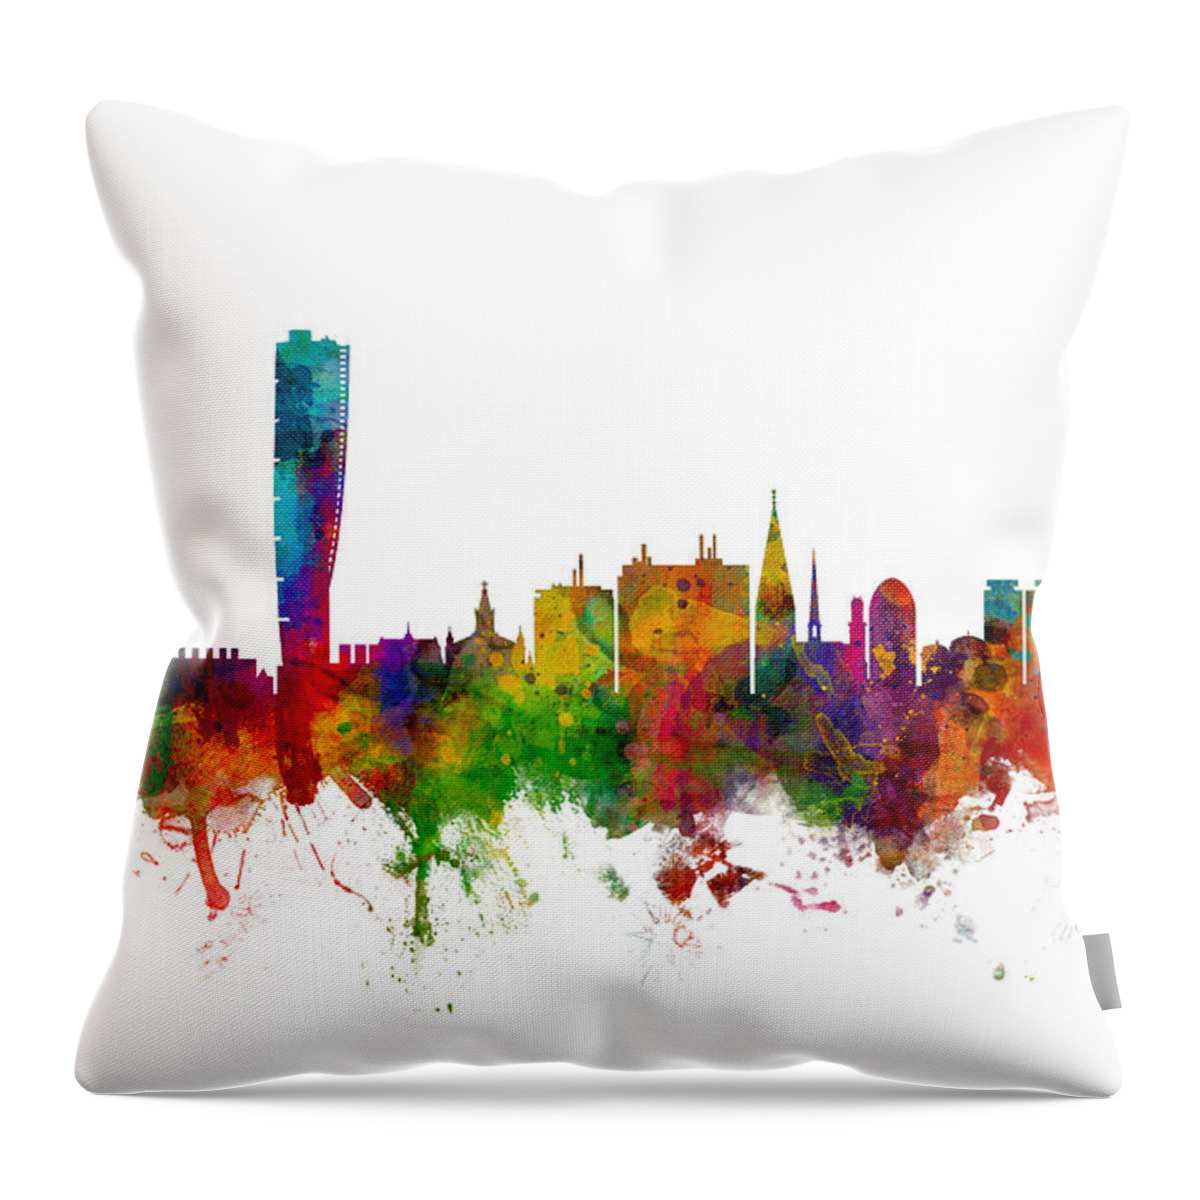 Sweden Throw Pillow featuring the digital art Malmo Sweden Skyline #1 by Michael Tompsett